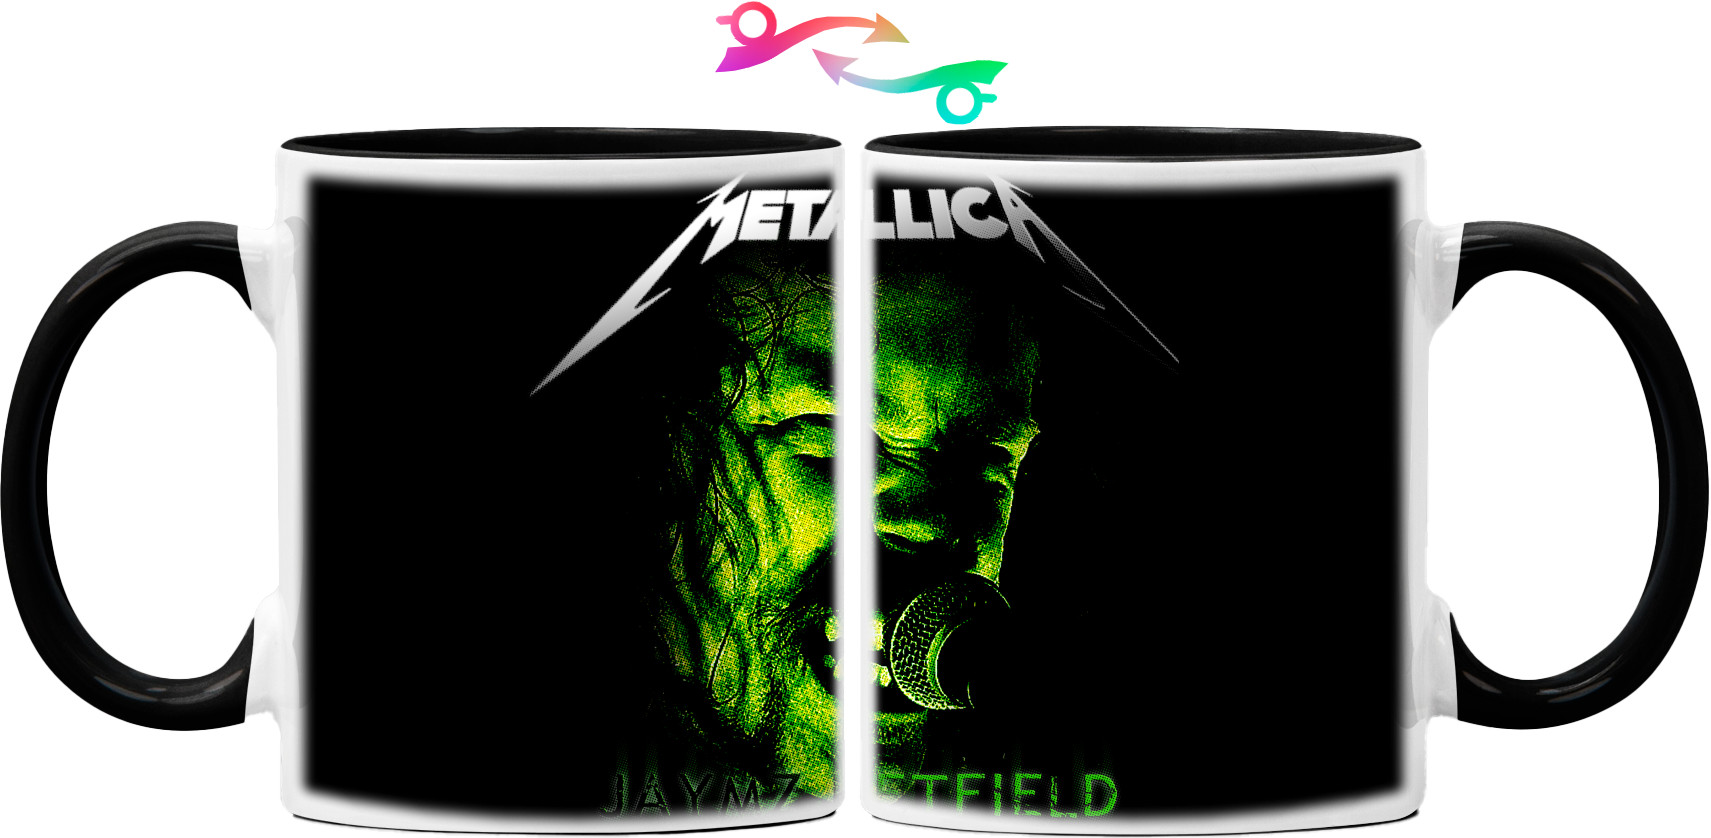 Metallica 18